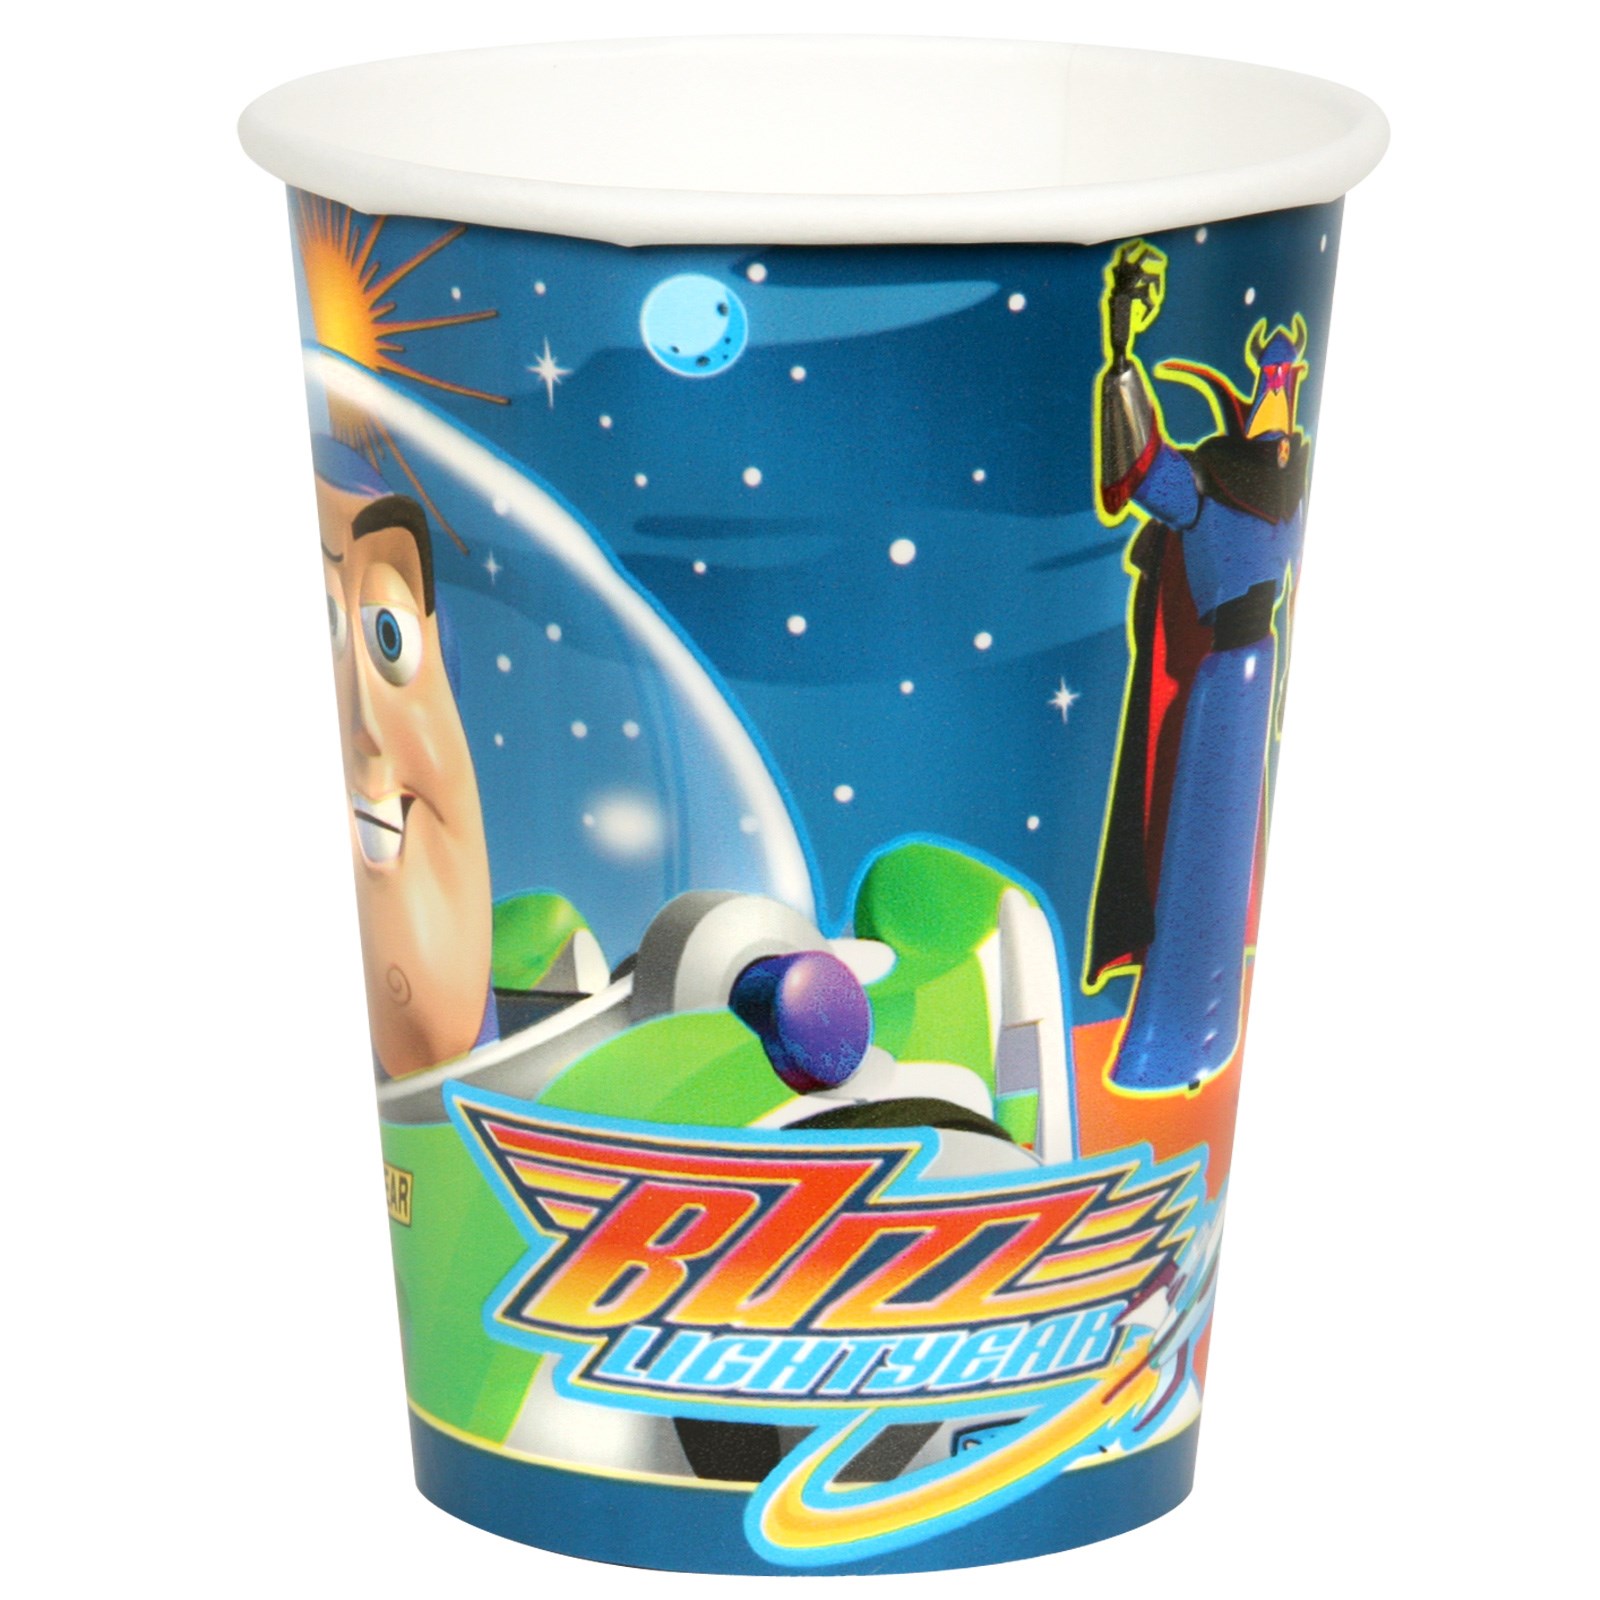 Buzz Lightyear Paper Cups